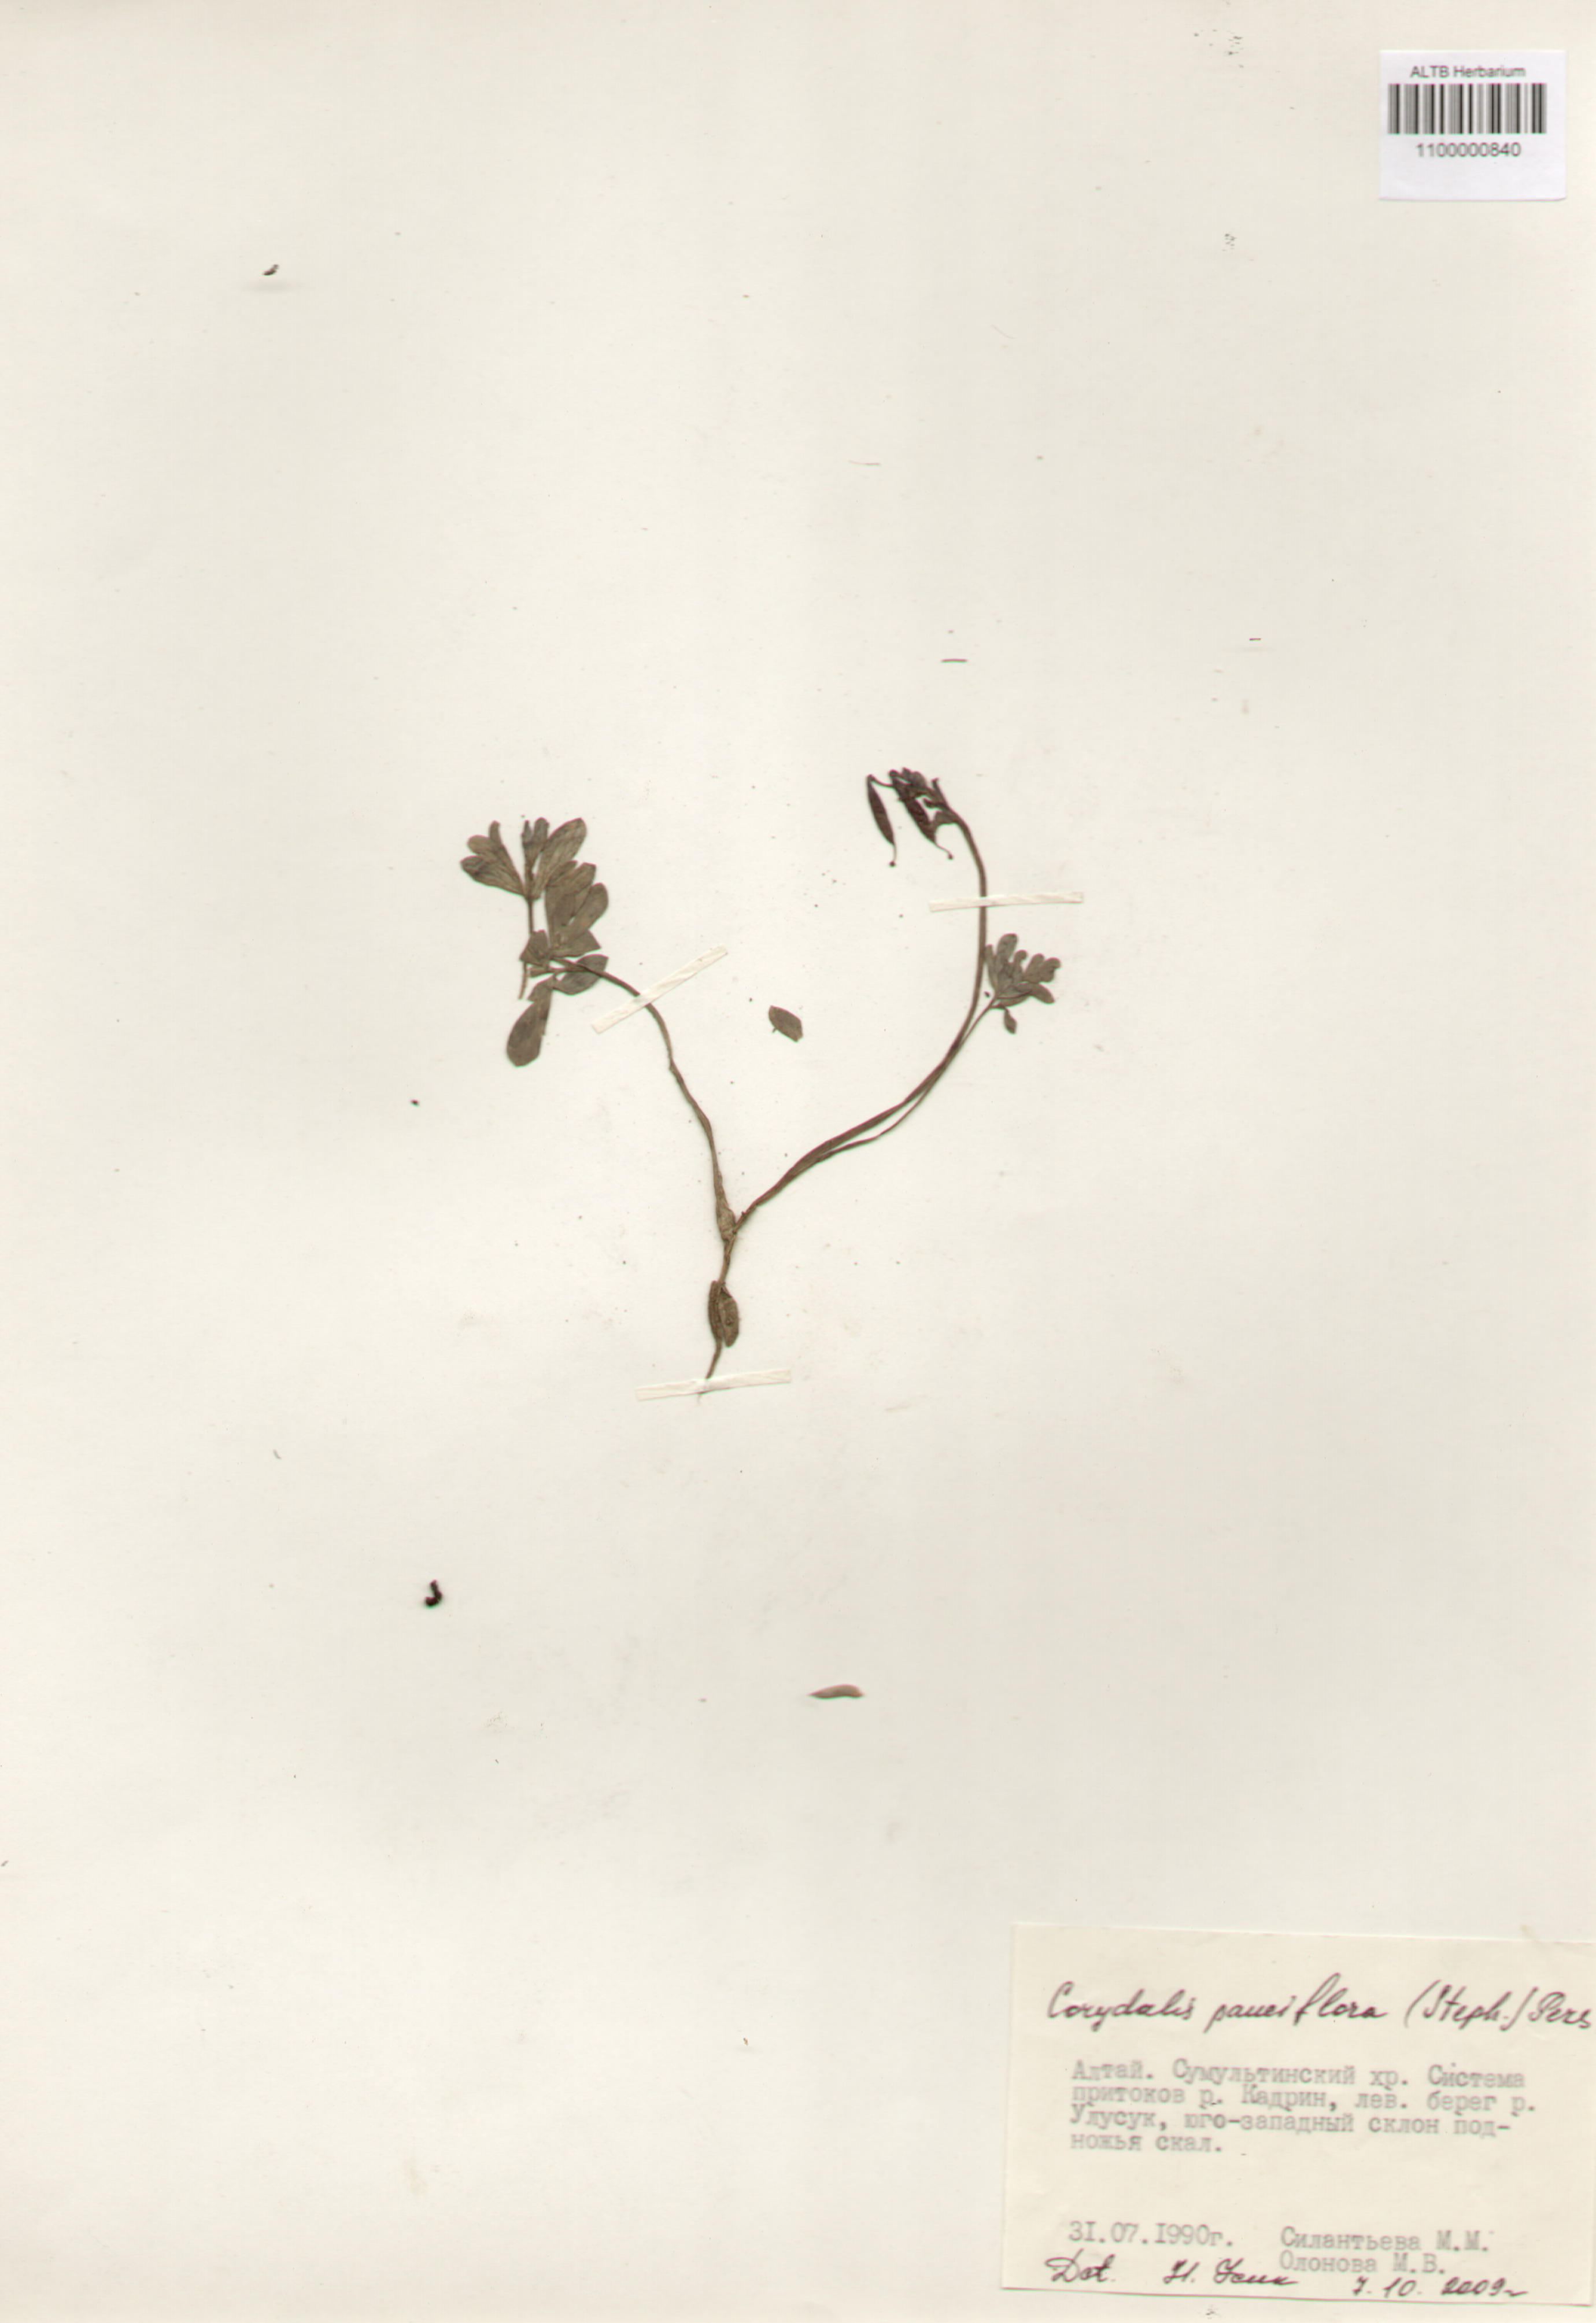 Fumariaceae,Corydalis pauciflora (Steph.) Pers.